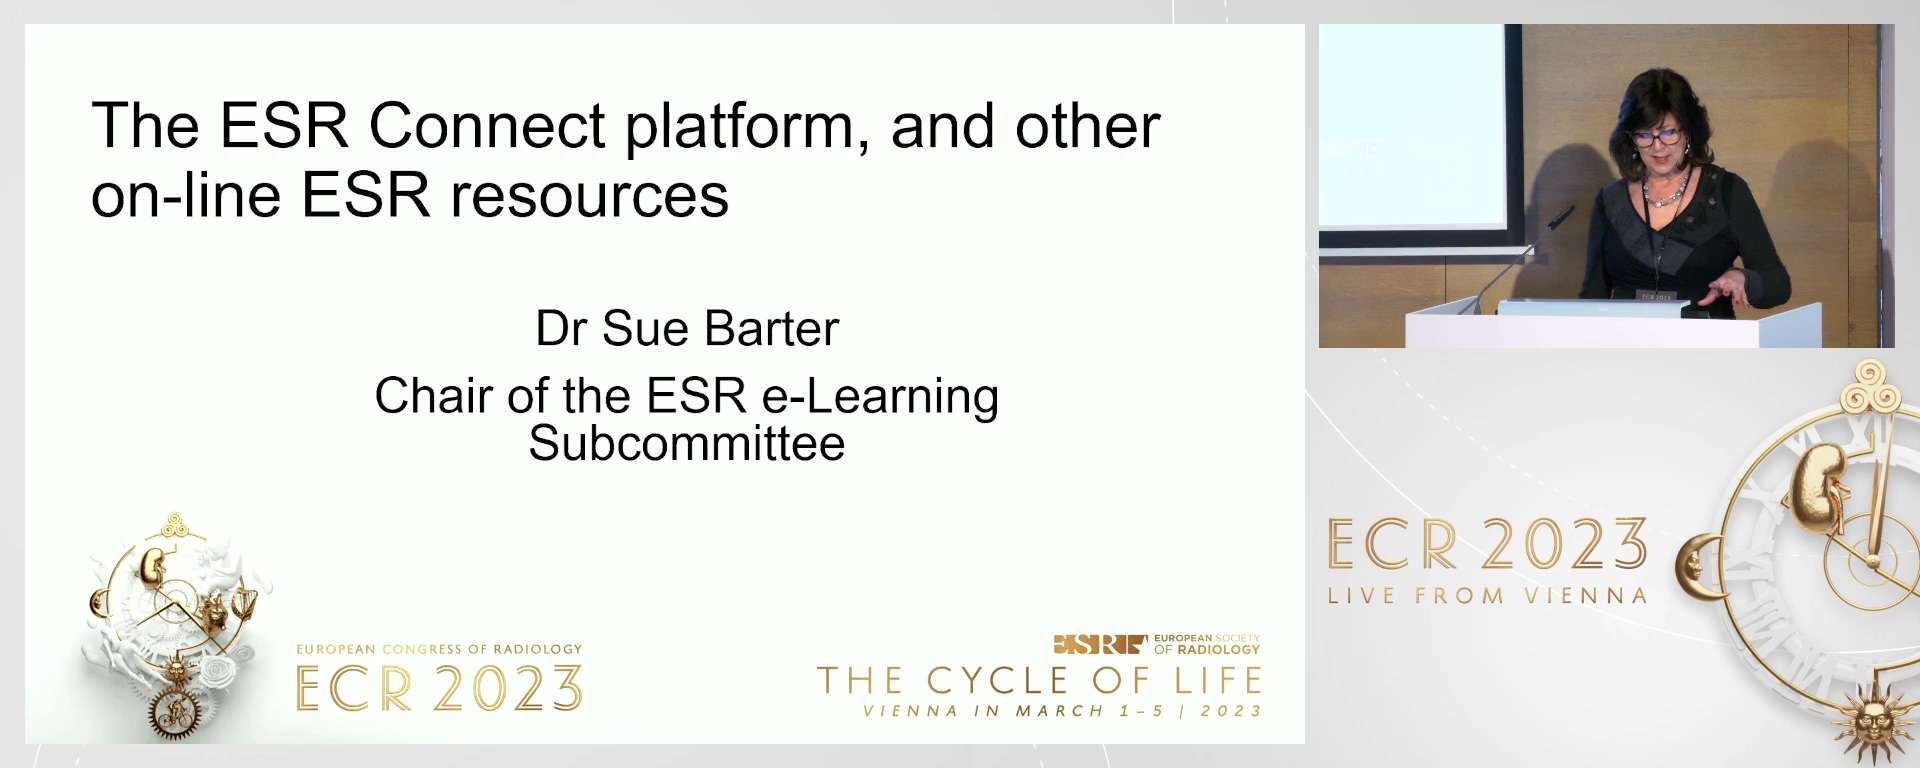 The ESR Connect platform, and other ESR resources - Sue Barter, Bedford / UK